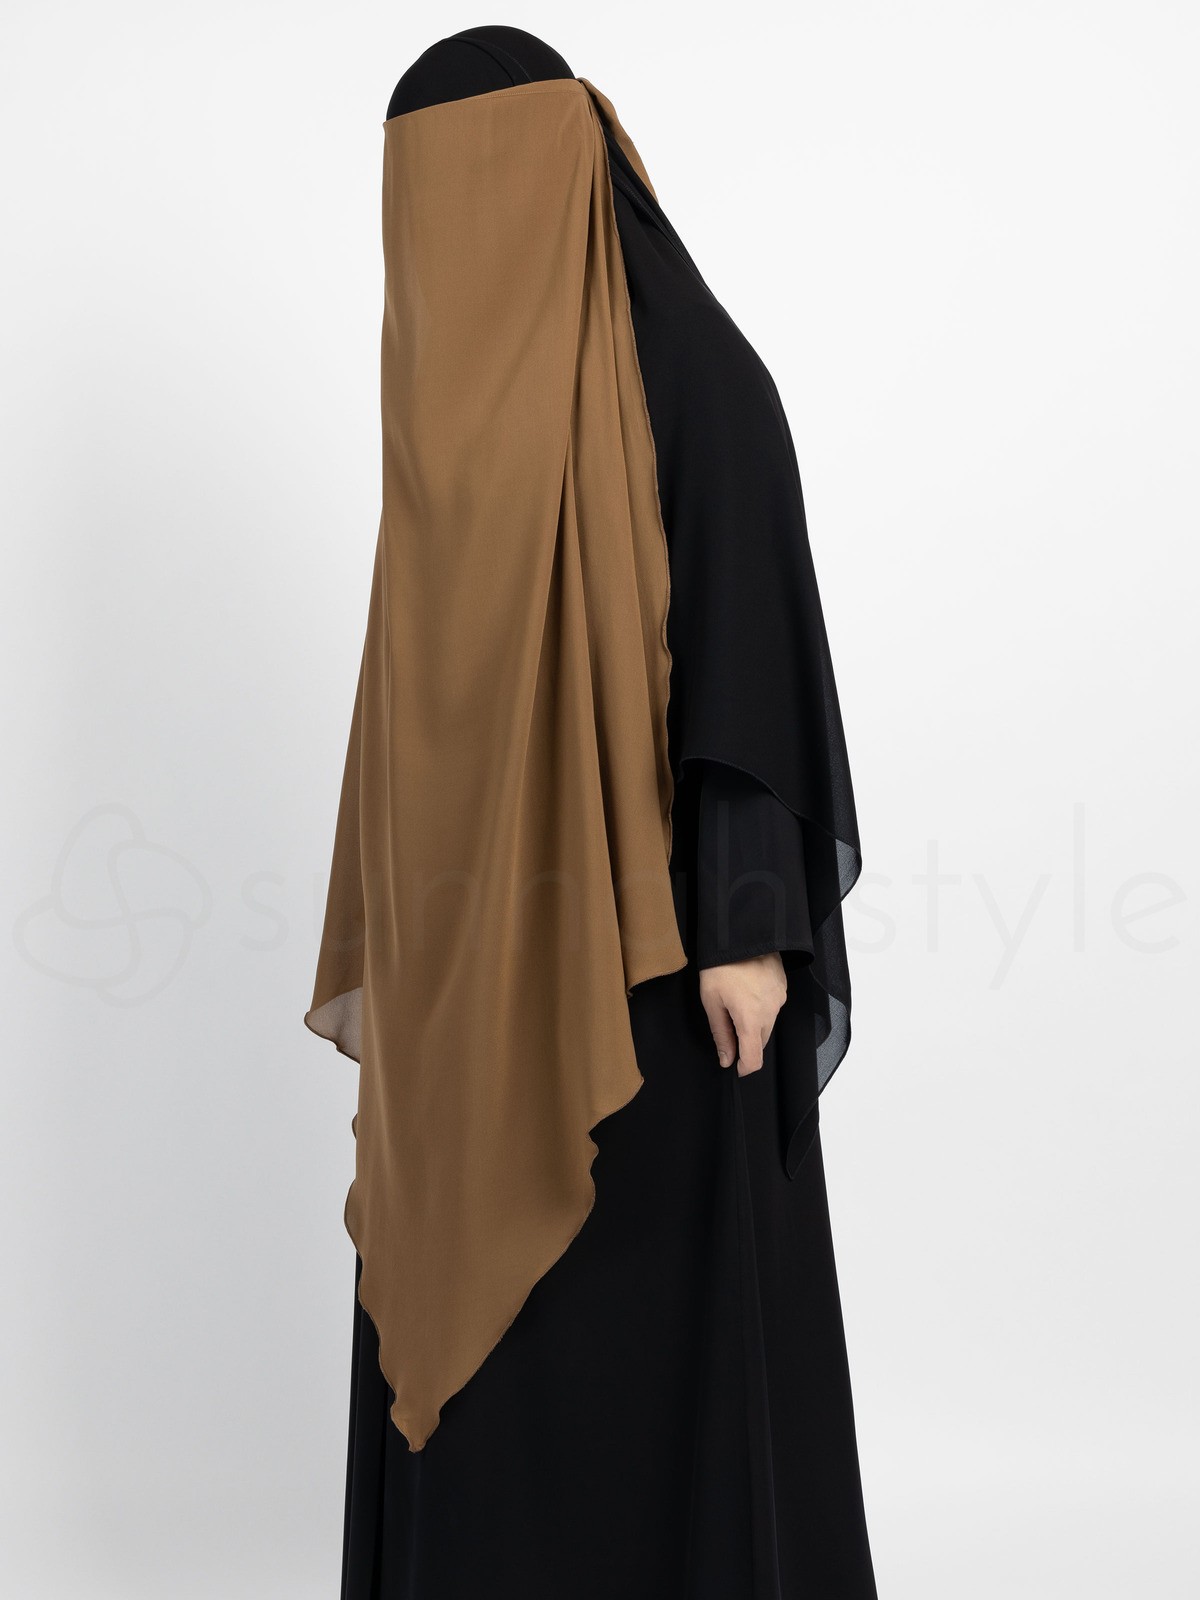 Sunnah Style - Extra Long Diamond Niqab (Blush)